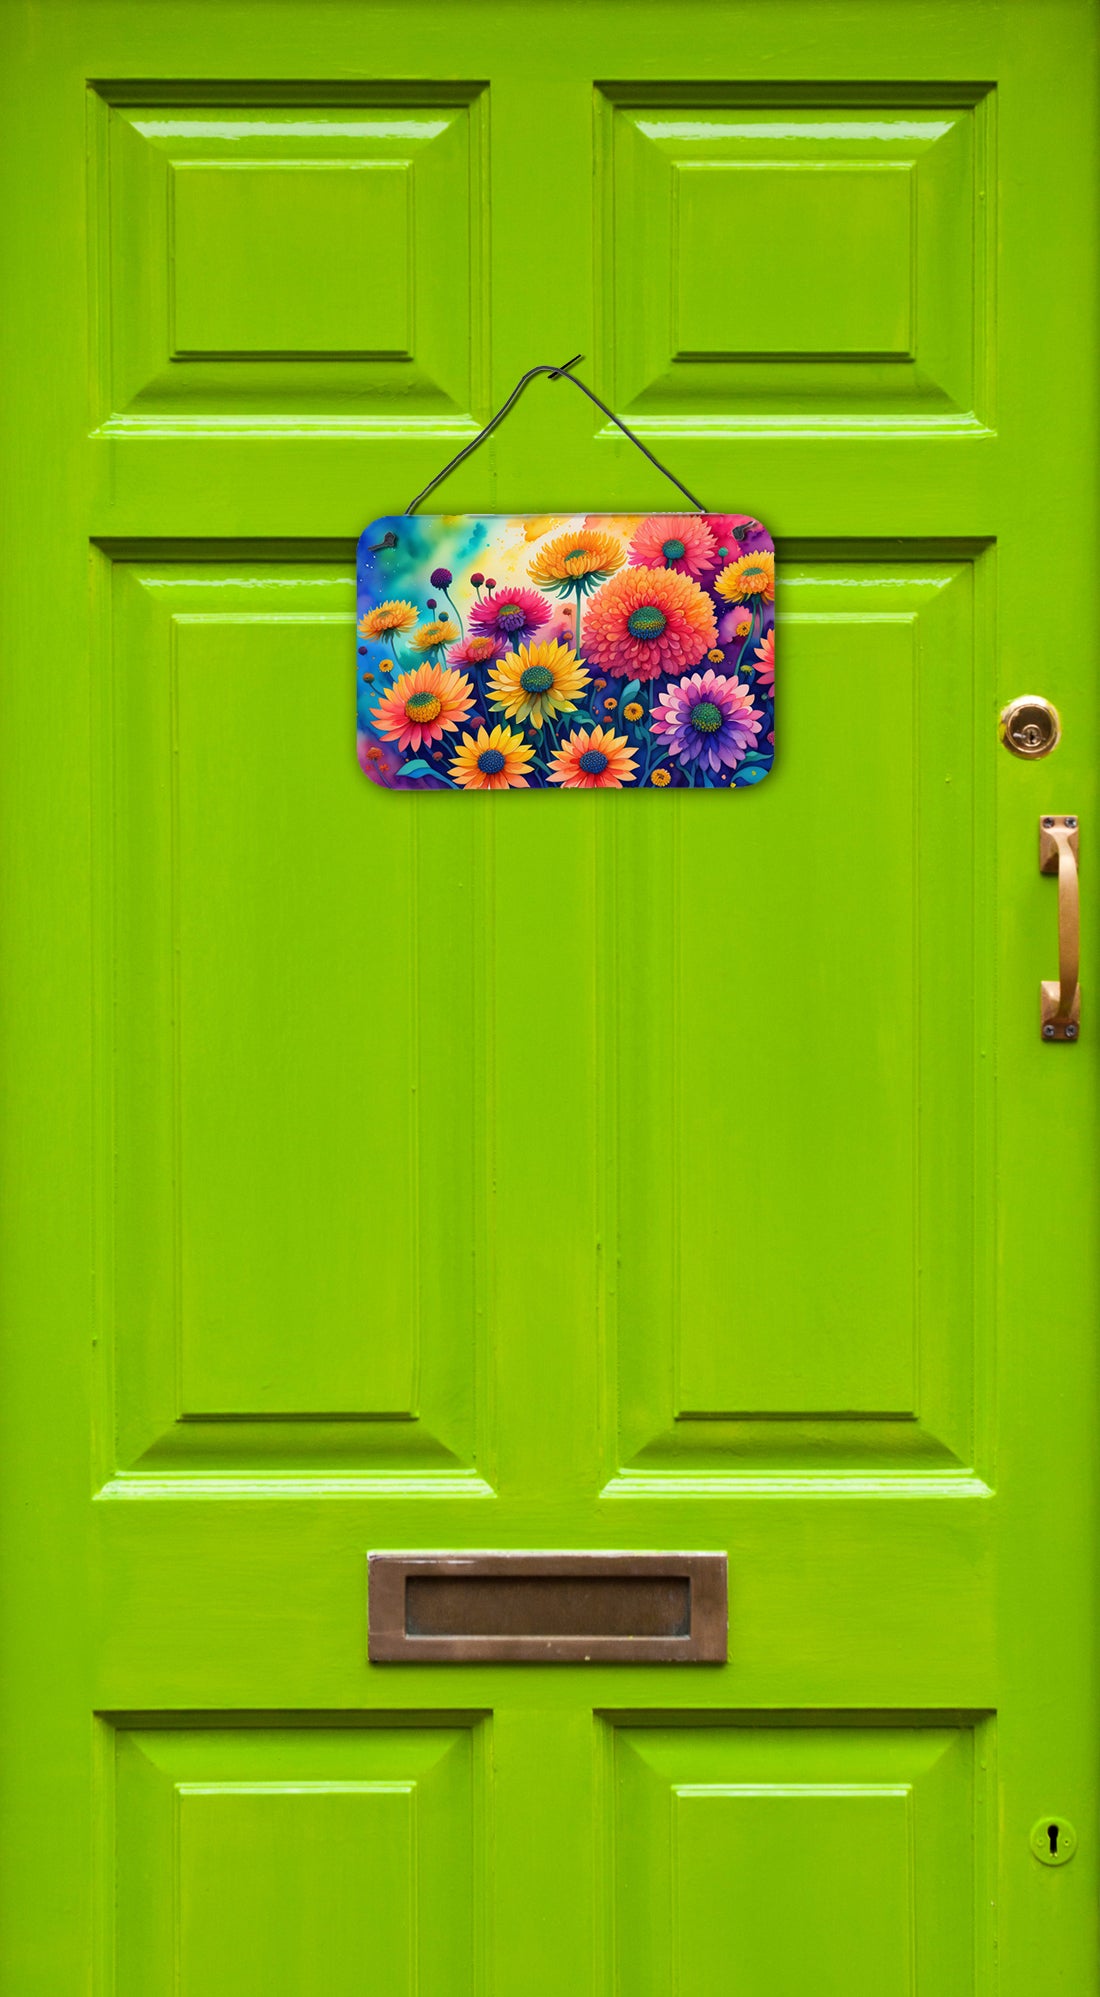 Buy this Chrysanthemums in Color Wall or Door Hanging Prints